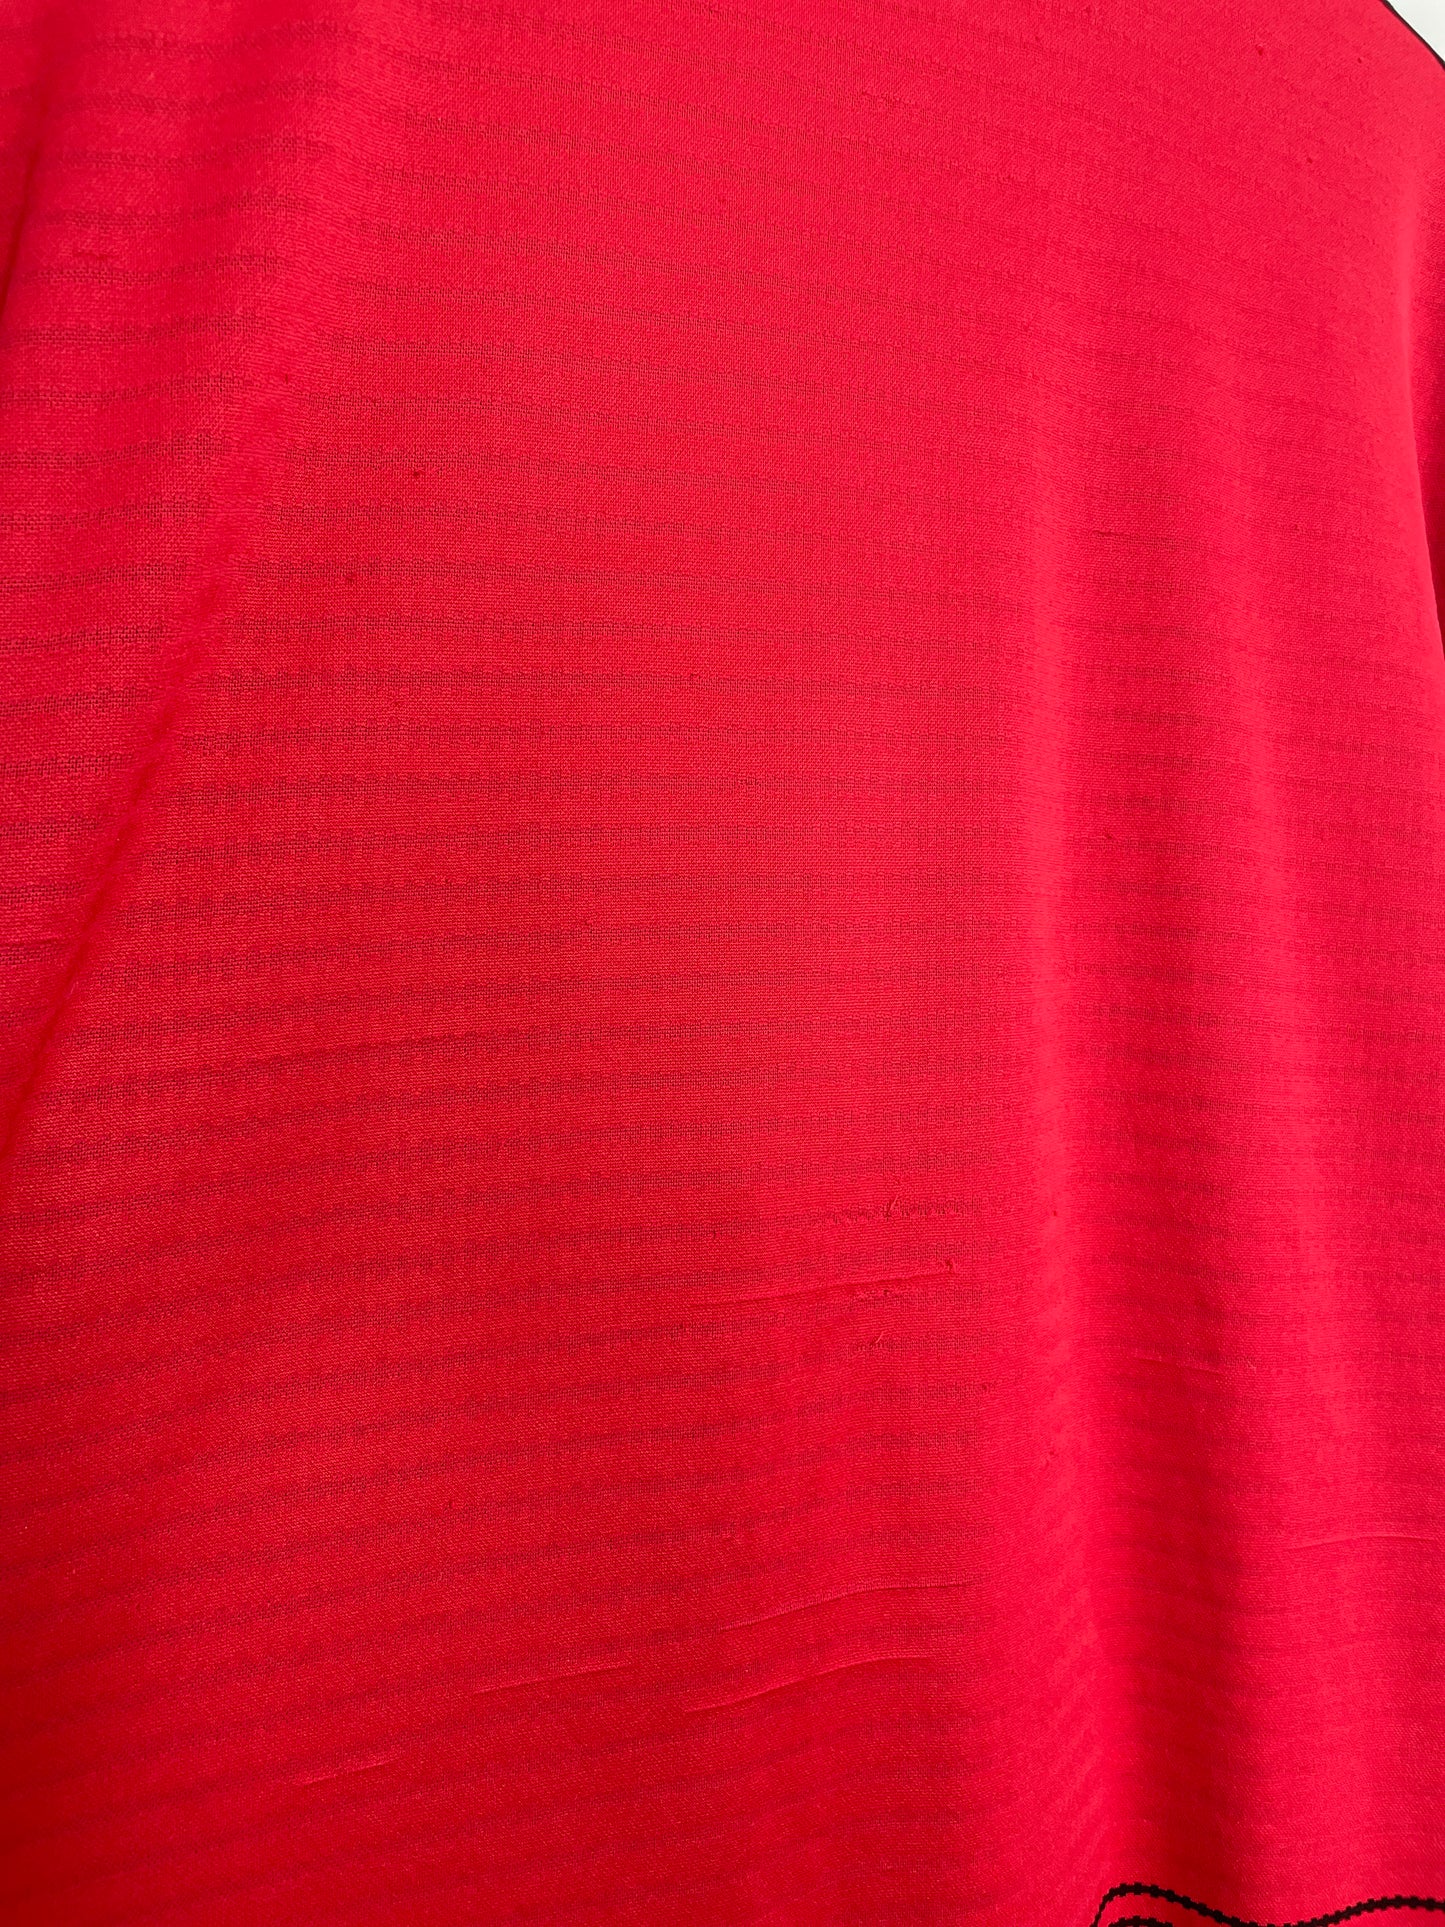 Manchester United 2018/2019 Home Shirt - Official Adidas Shirt – Casual  Football Shirts